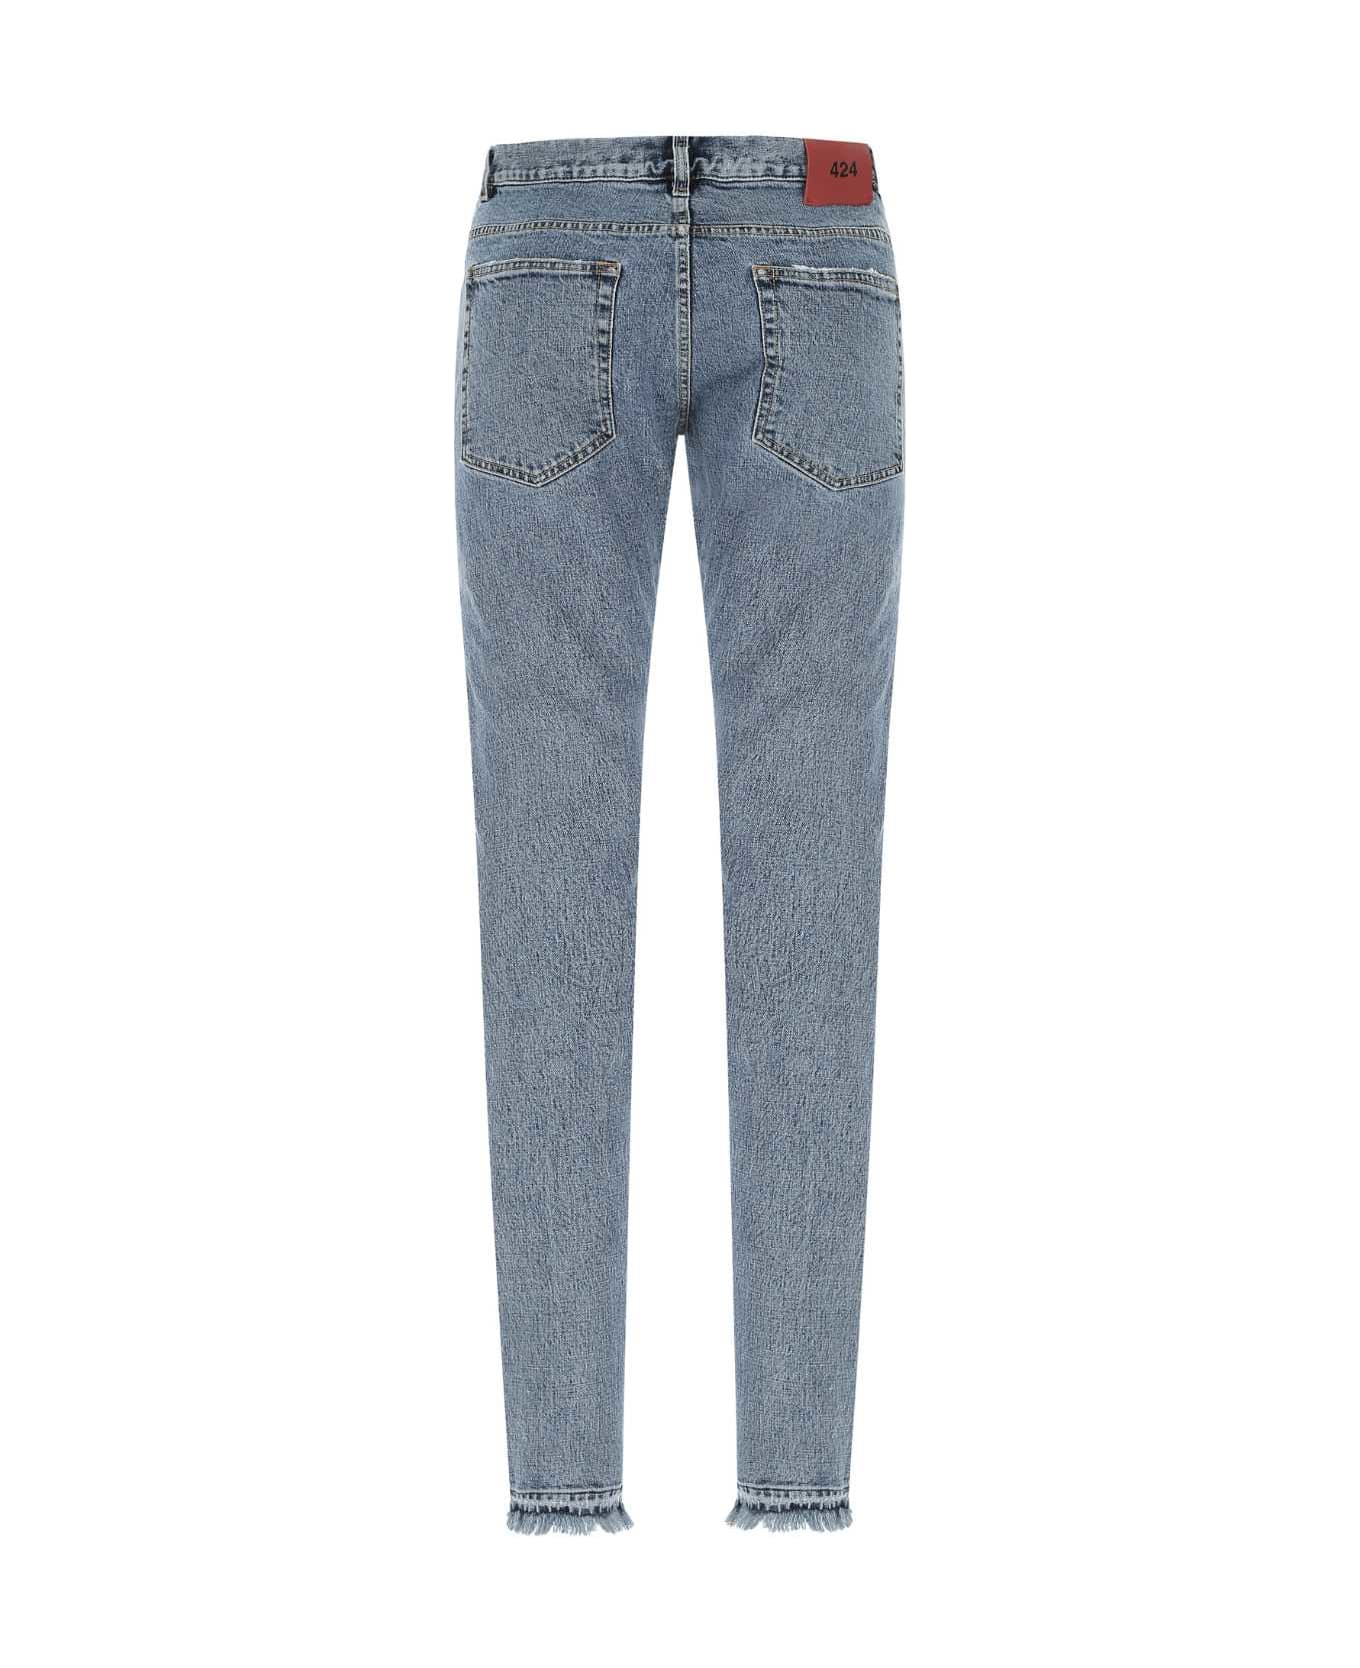 FourTwoFour on Fairfax Stretch Denim Jeans - 89